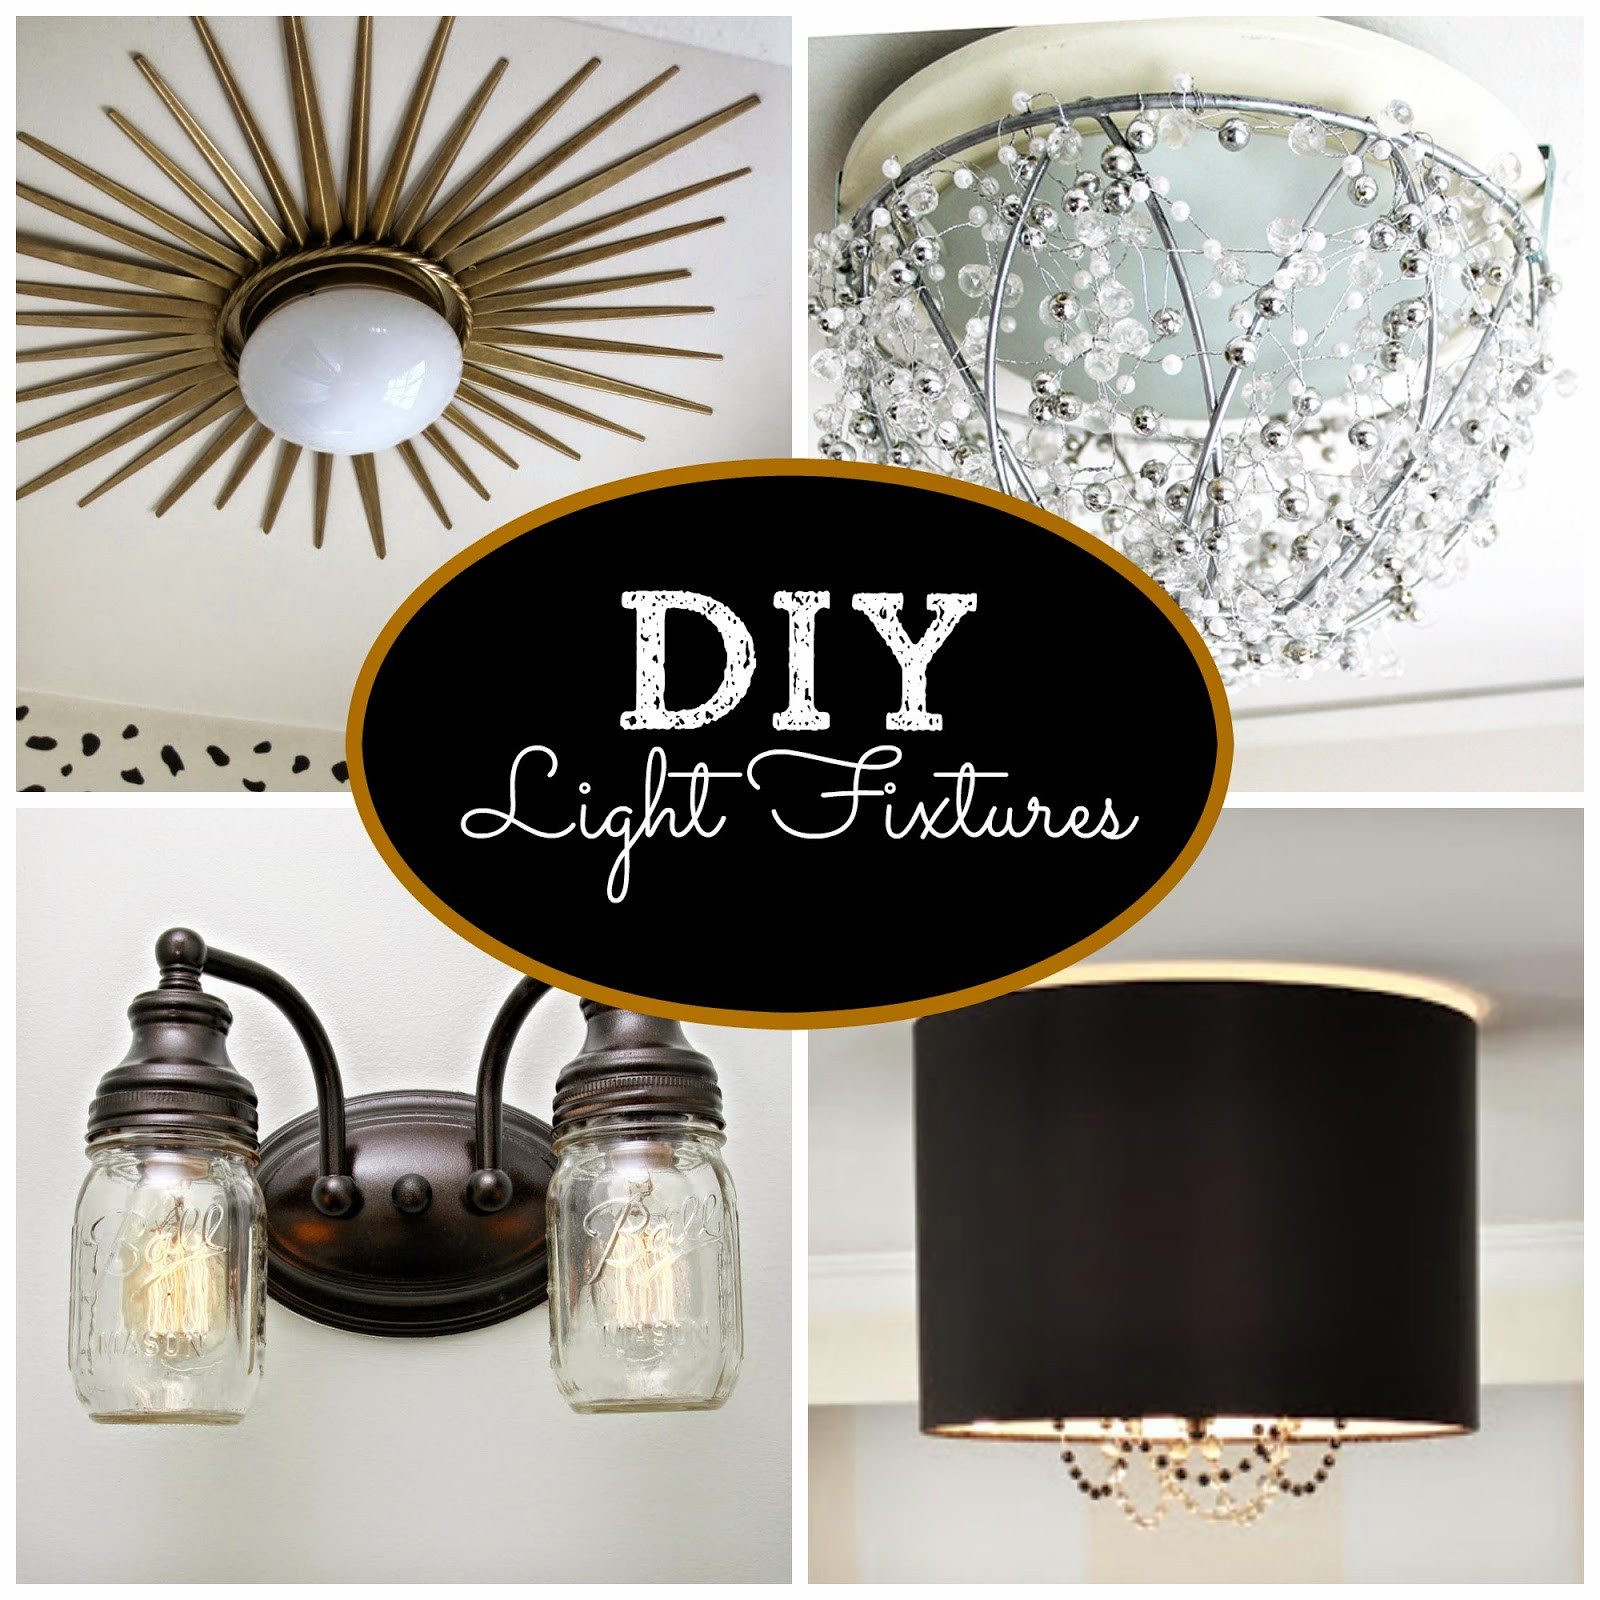 Best ideas about DIY Light Fixtures
. Save or Pin Home Made Modern Kitchen Light Fixture Now.